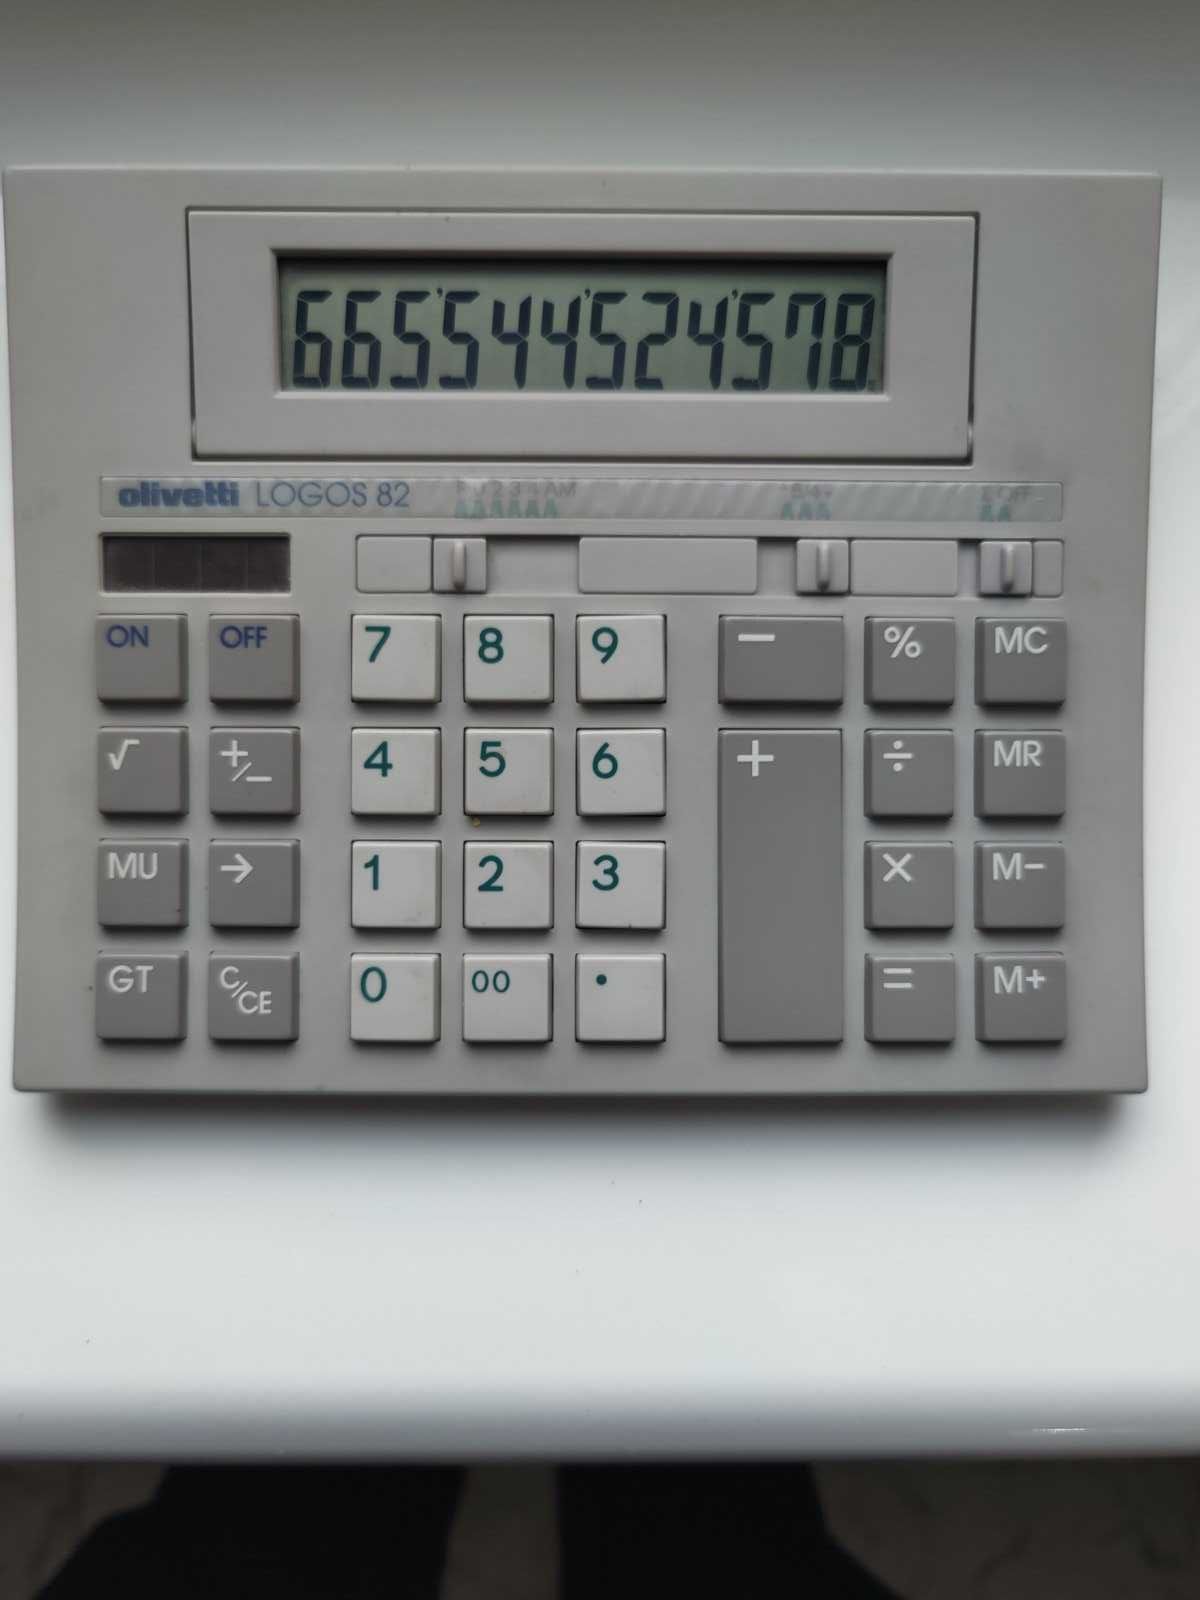 Бухгалтерский настольный калькулятор Olivetti logos 82